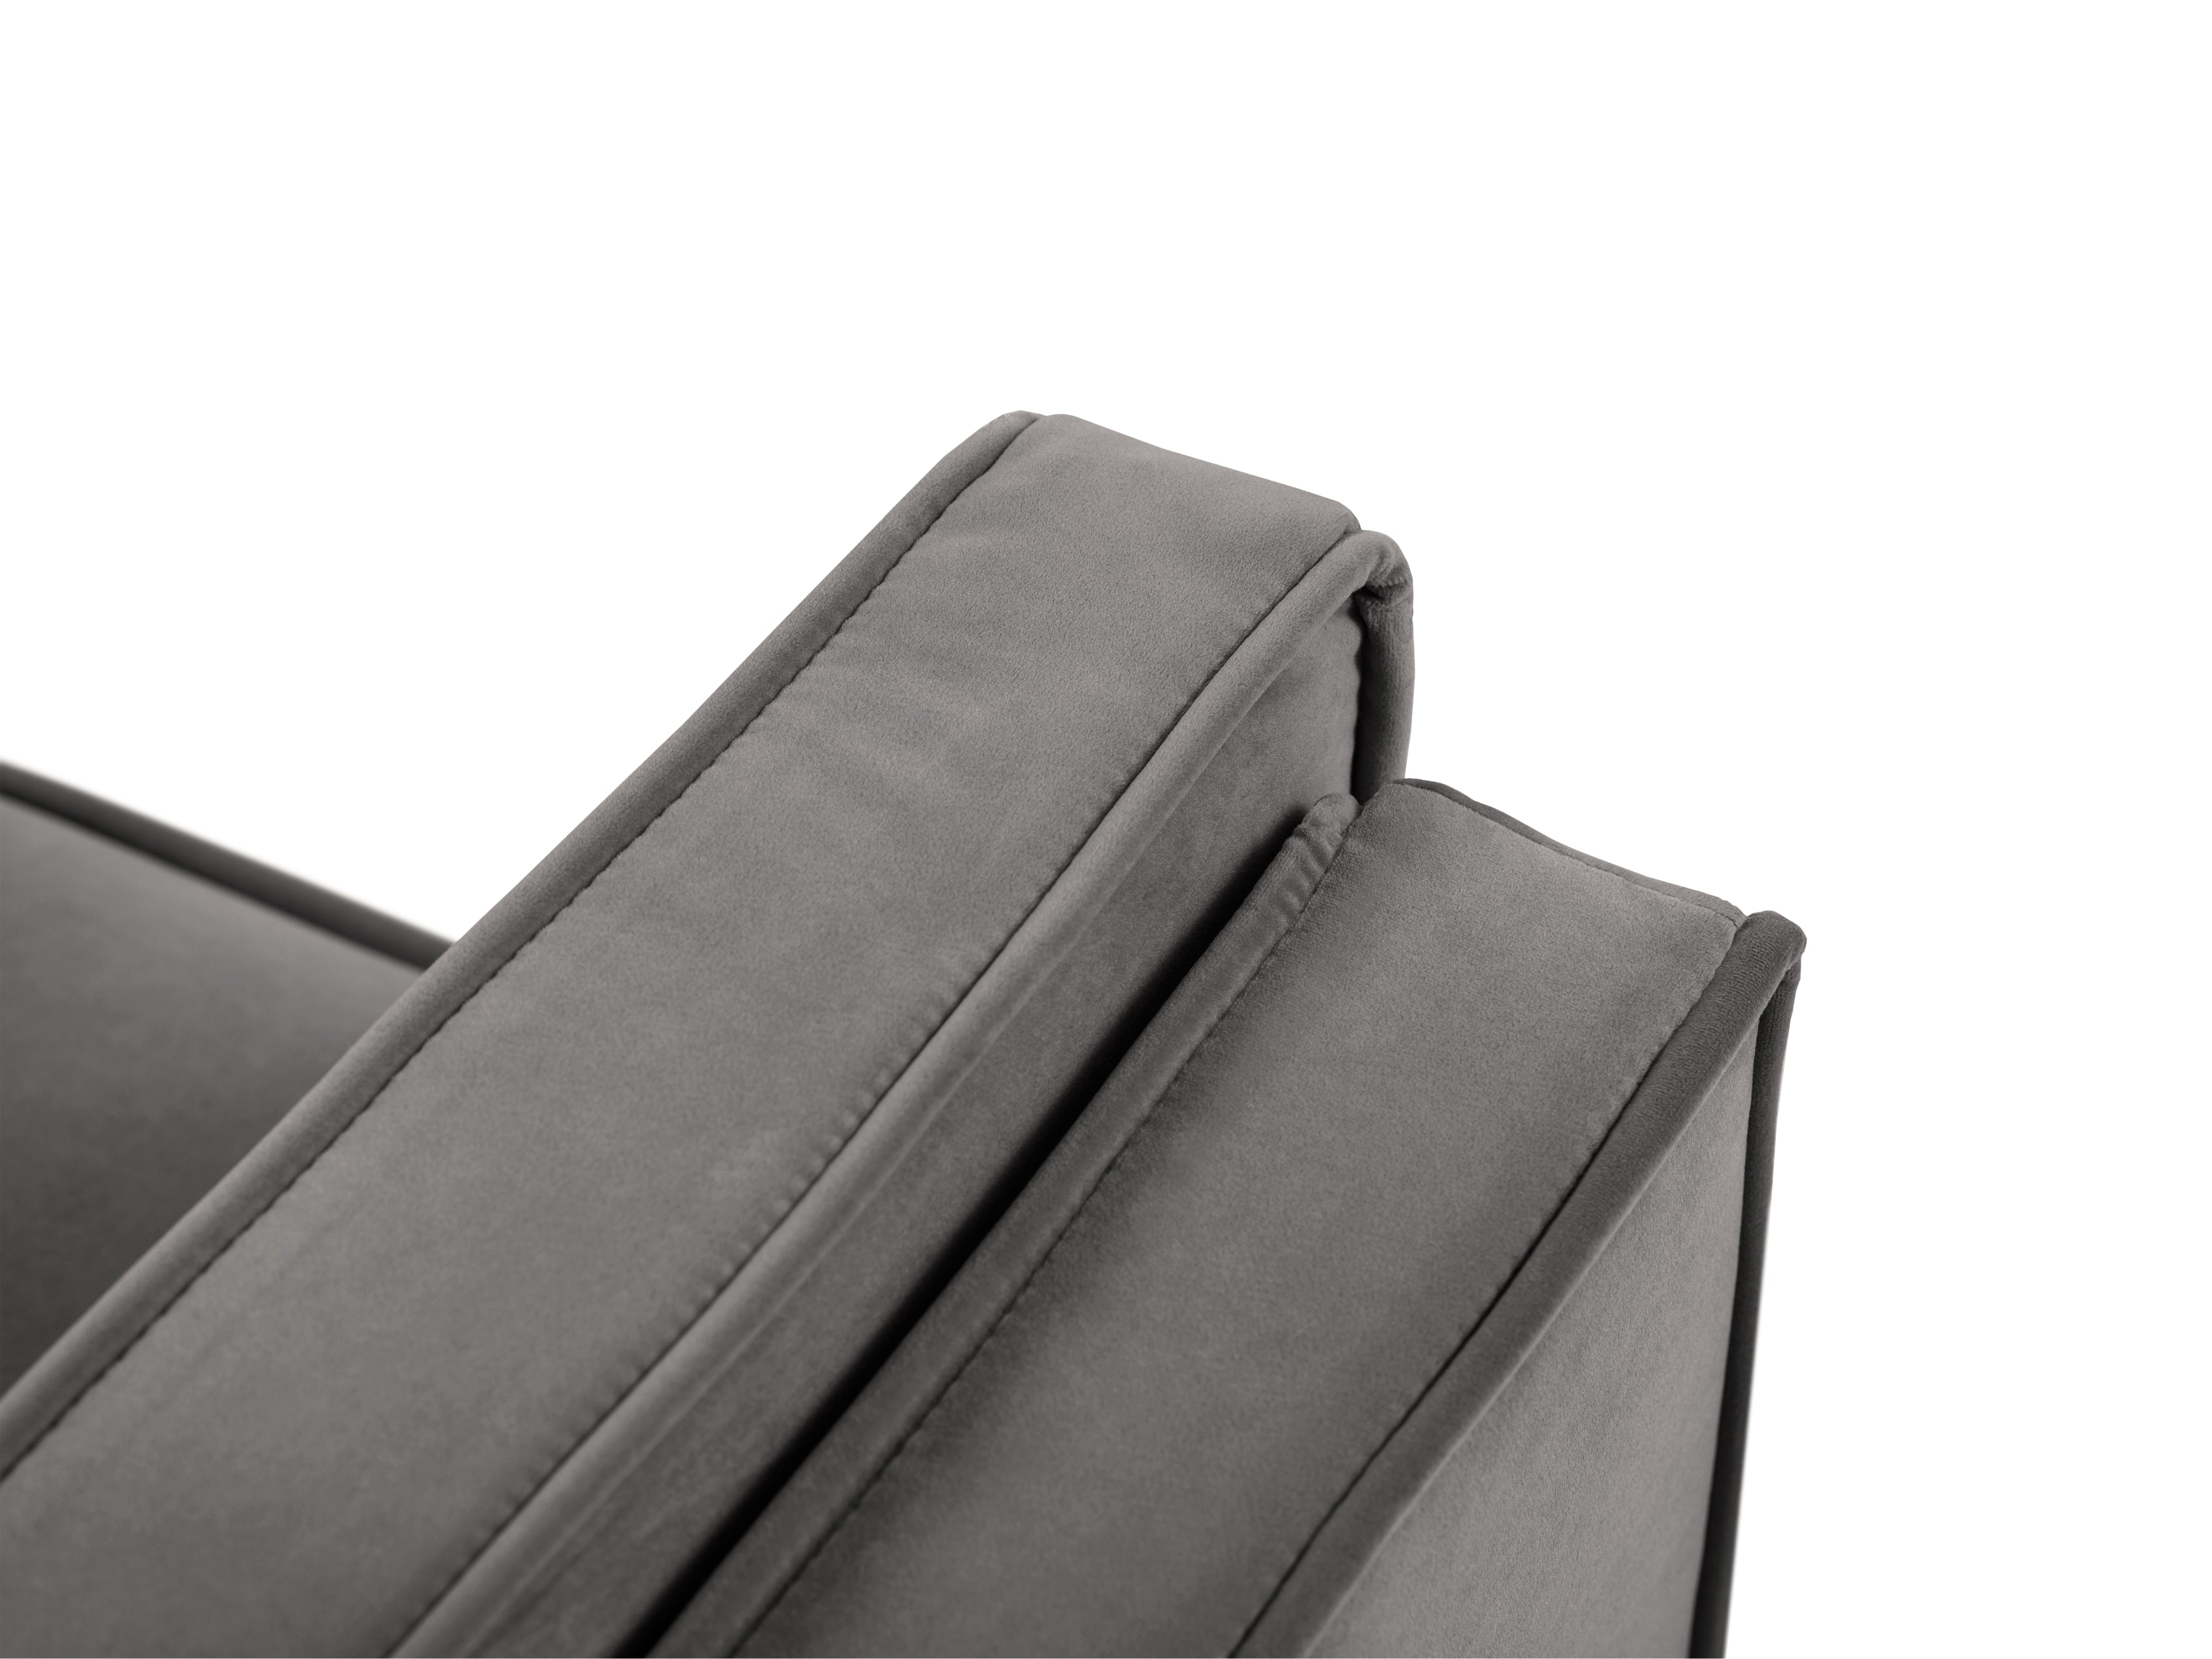 LUIS light grey velvet 3-seater sofa with gold base